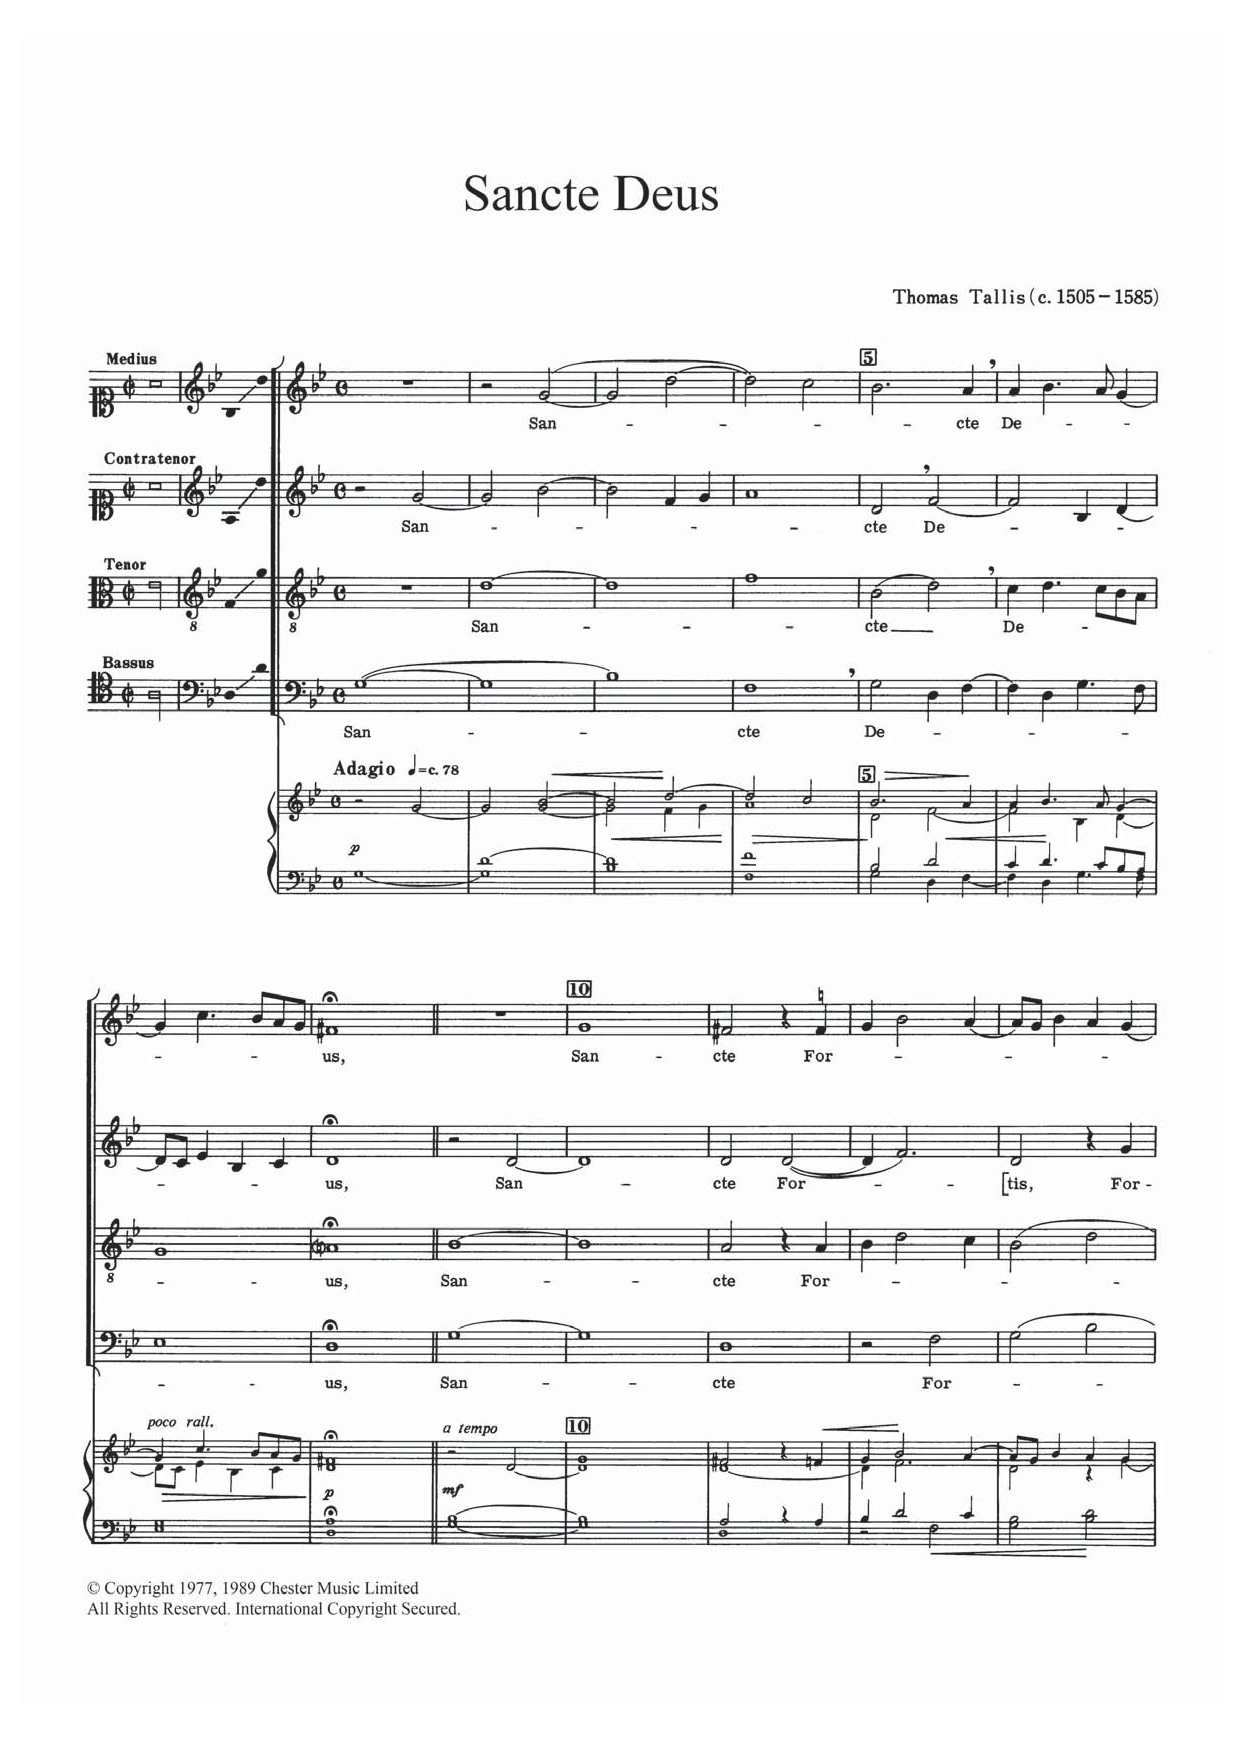 Thomas Tallis Sancte Deus sheet music notes and chords arranged for SATB Choir